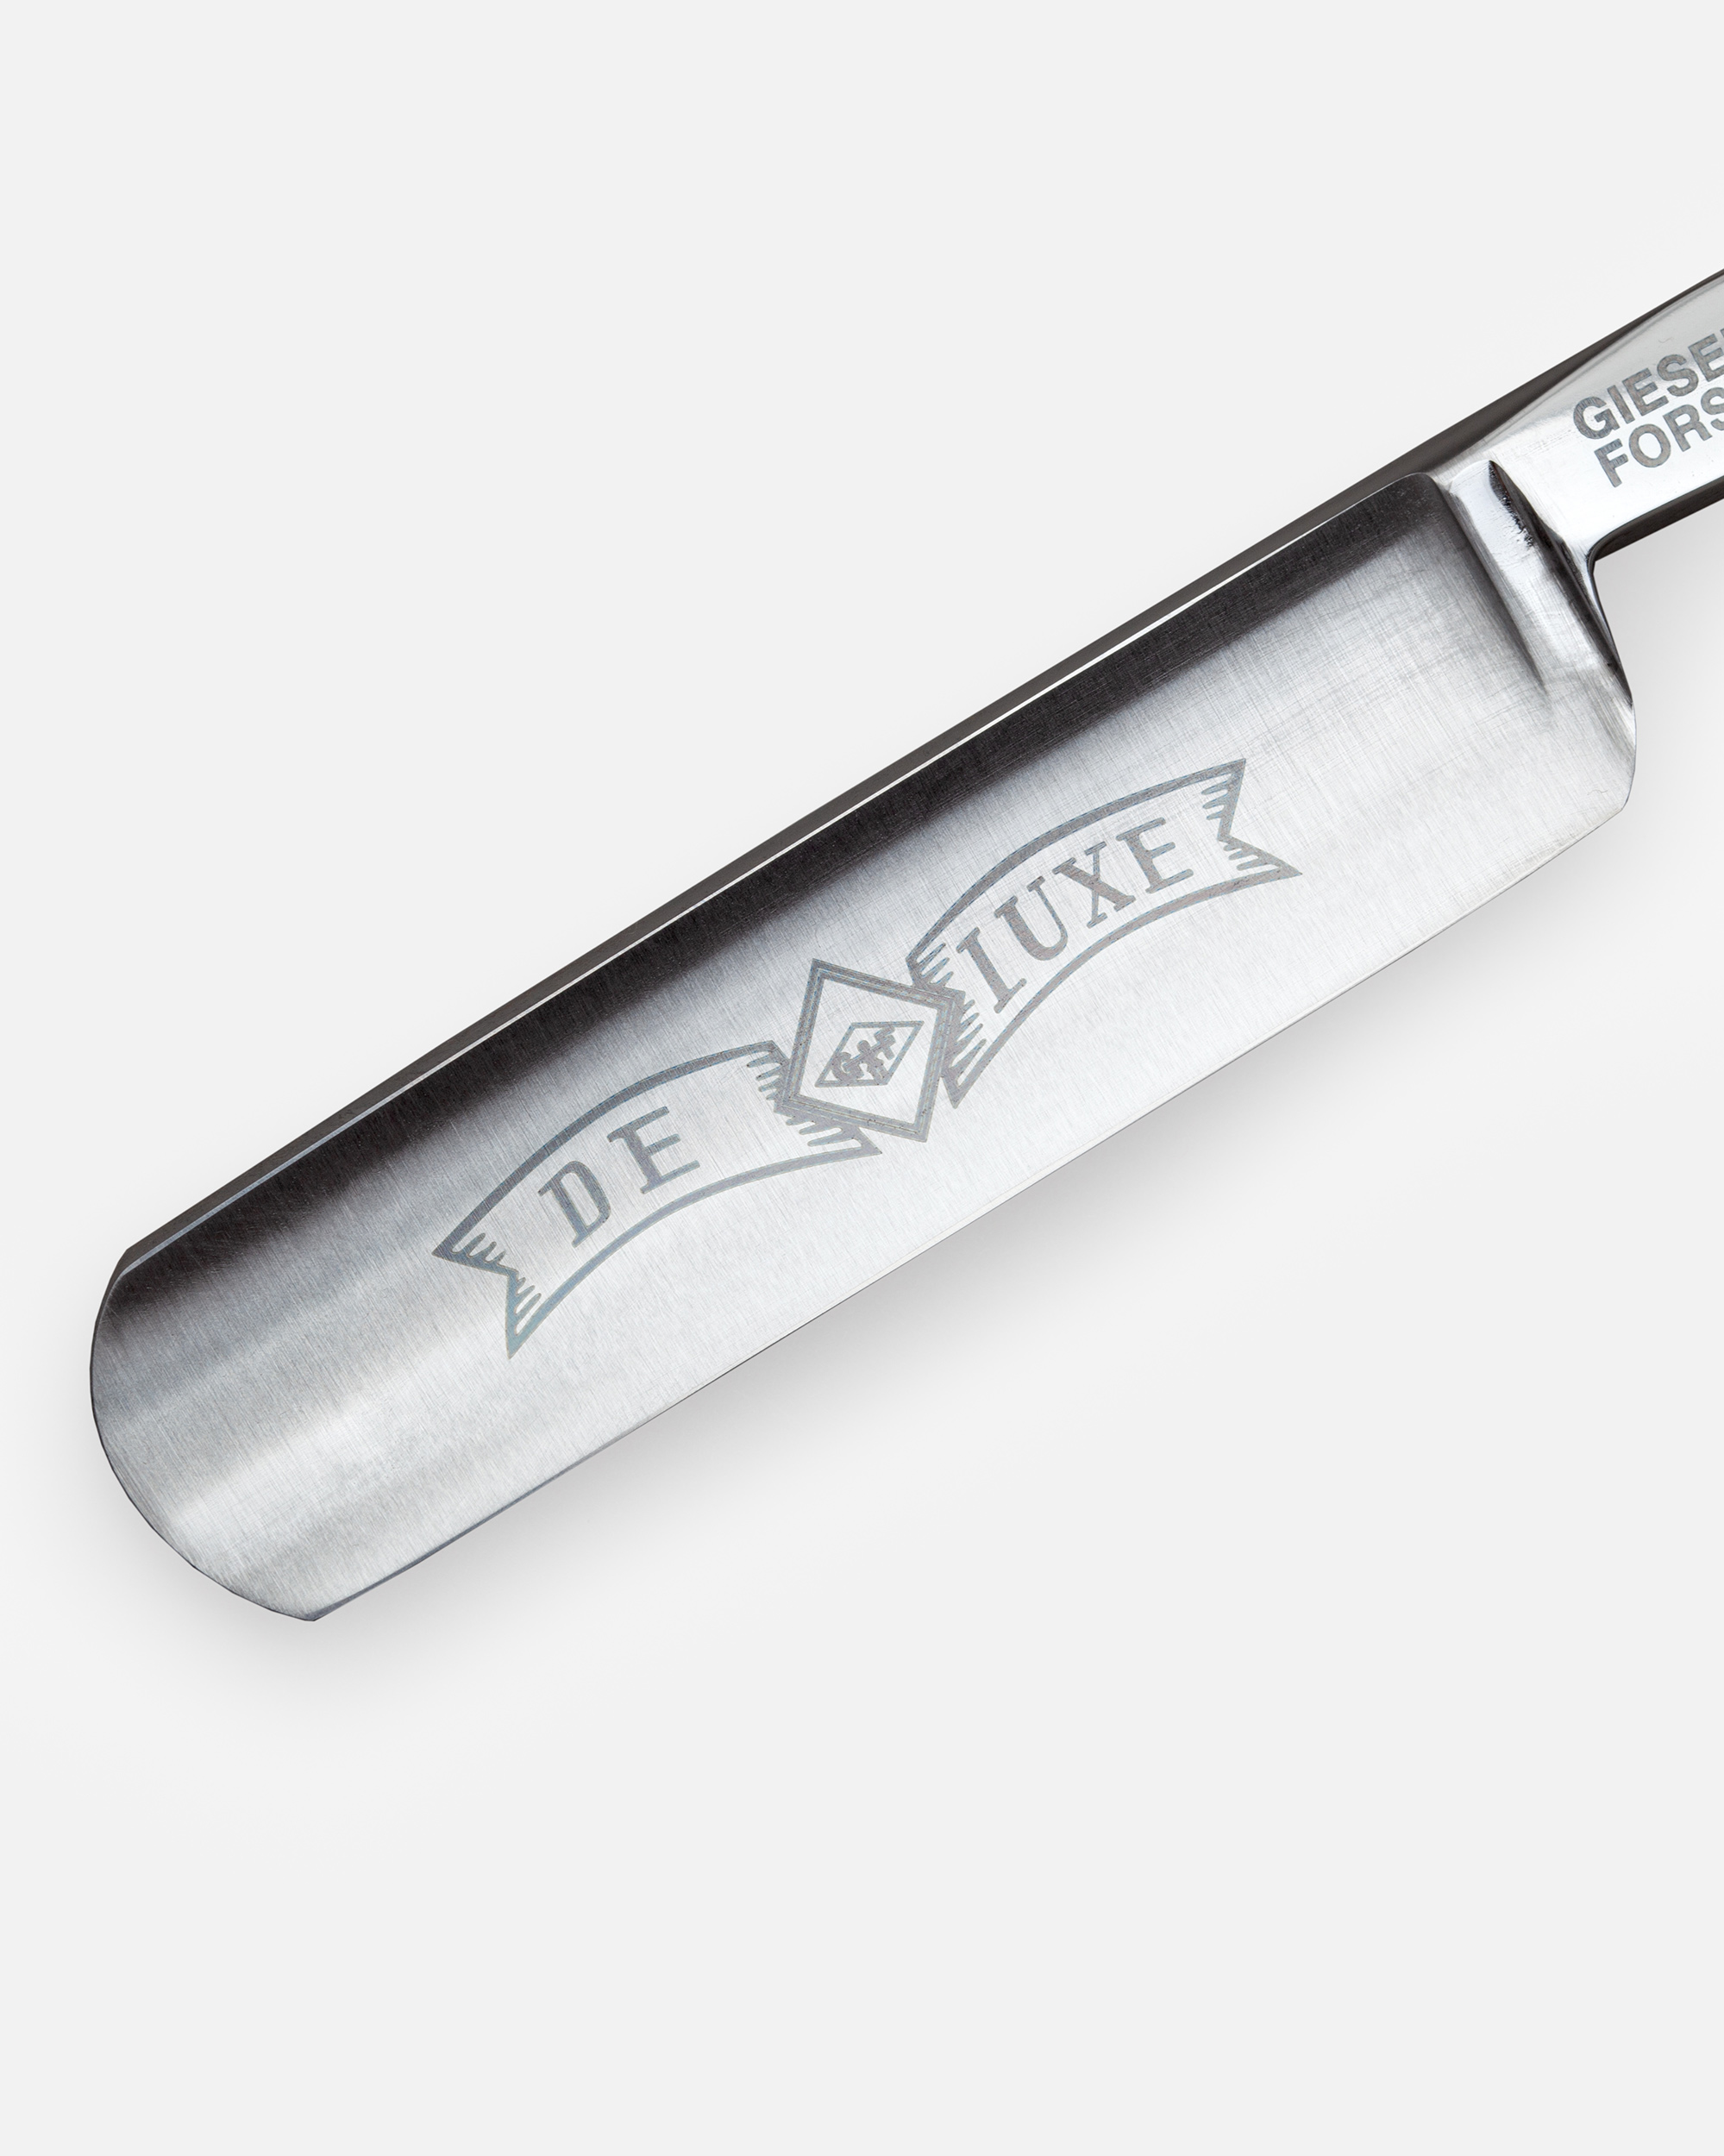 G&F Timor® Deluxe Rasiermesser 5/8 cs mit Echthornschale